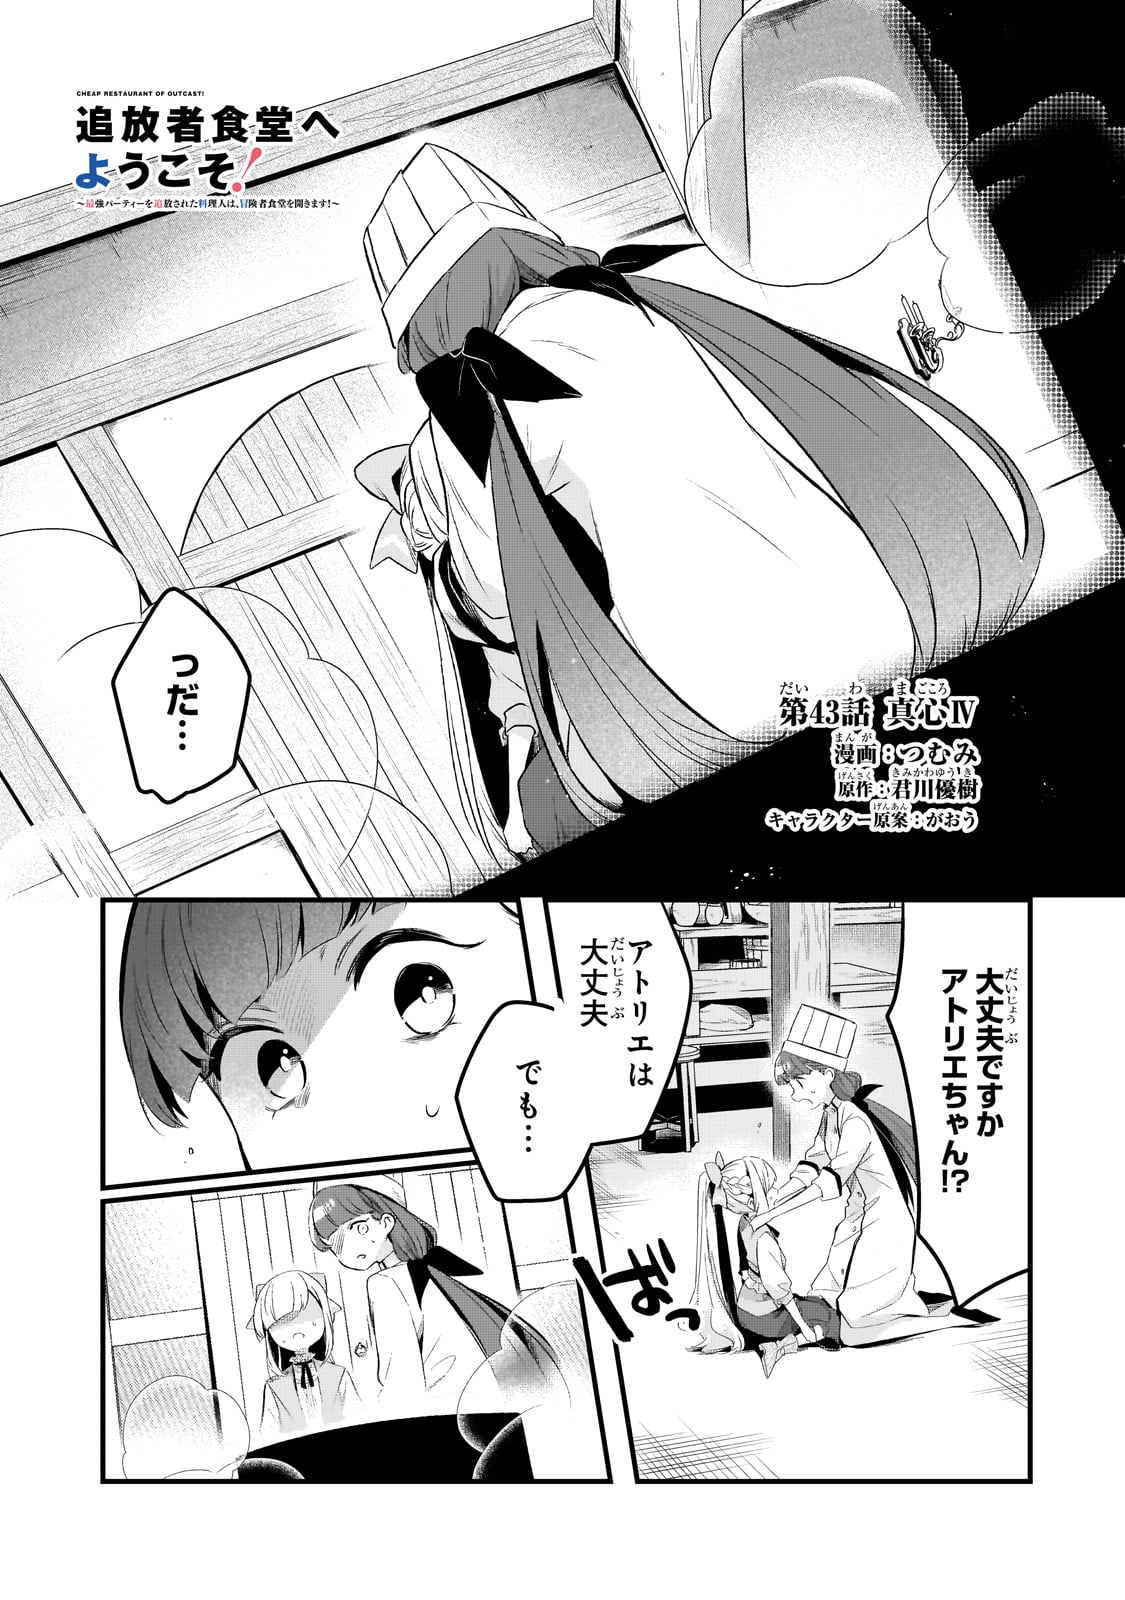 Tsuihousha Shokudou e Youkoso! - Chapter 43 - Page 1